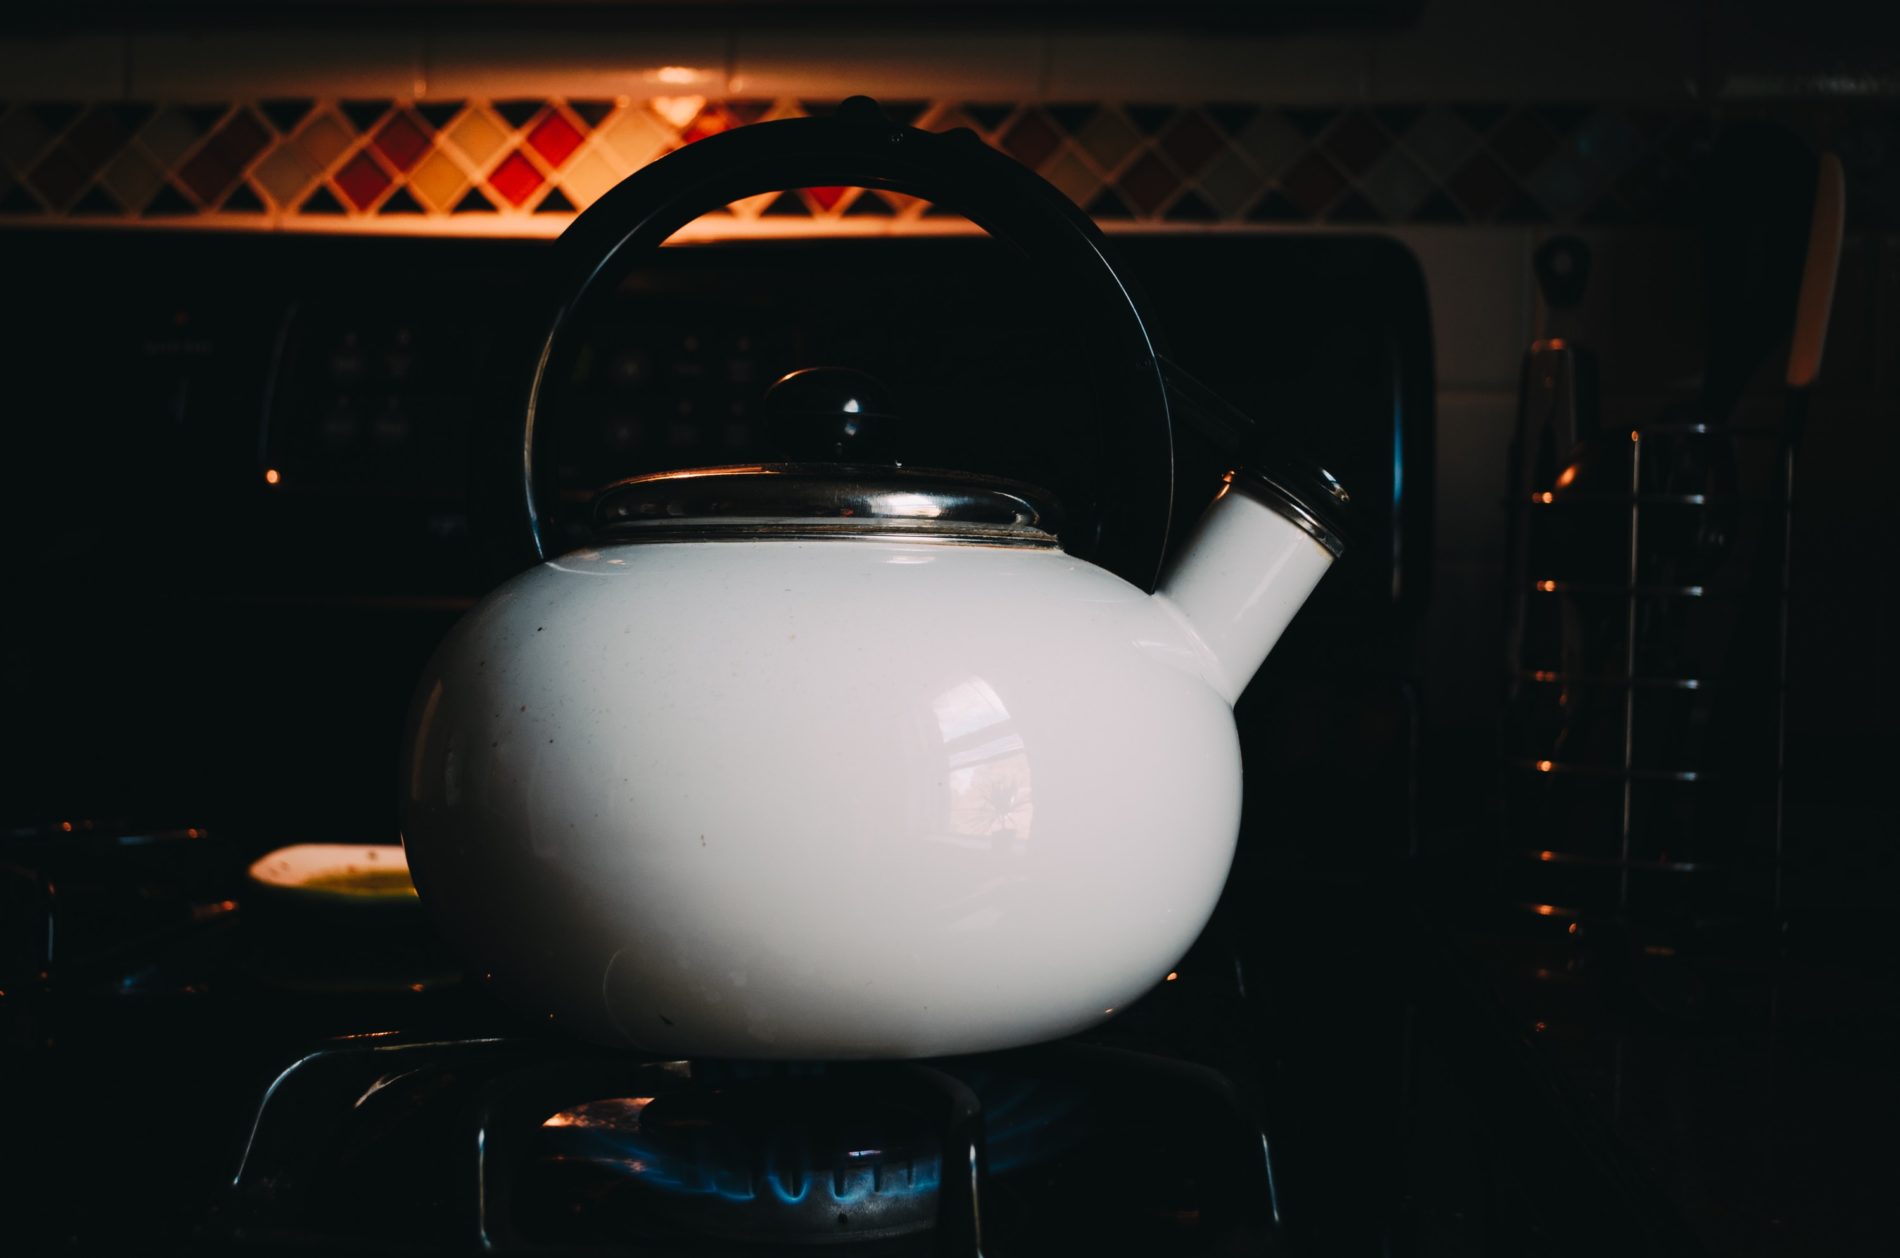 Tea cooker on the hob